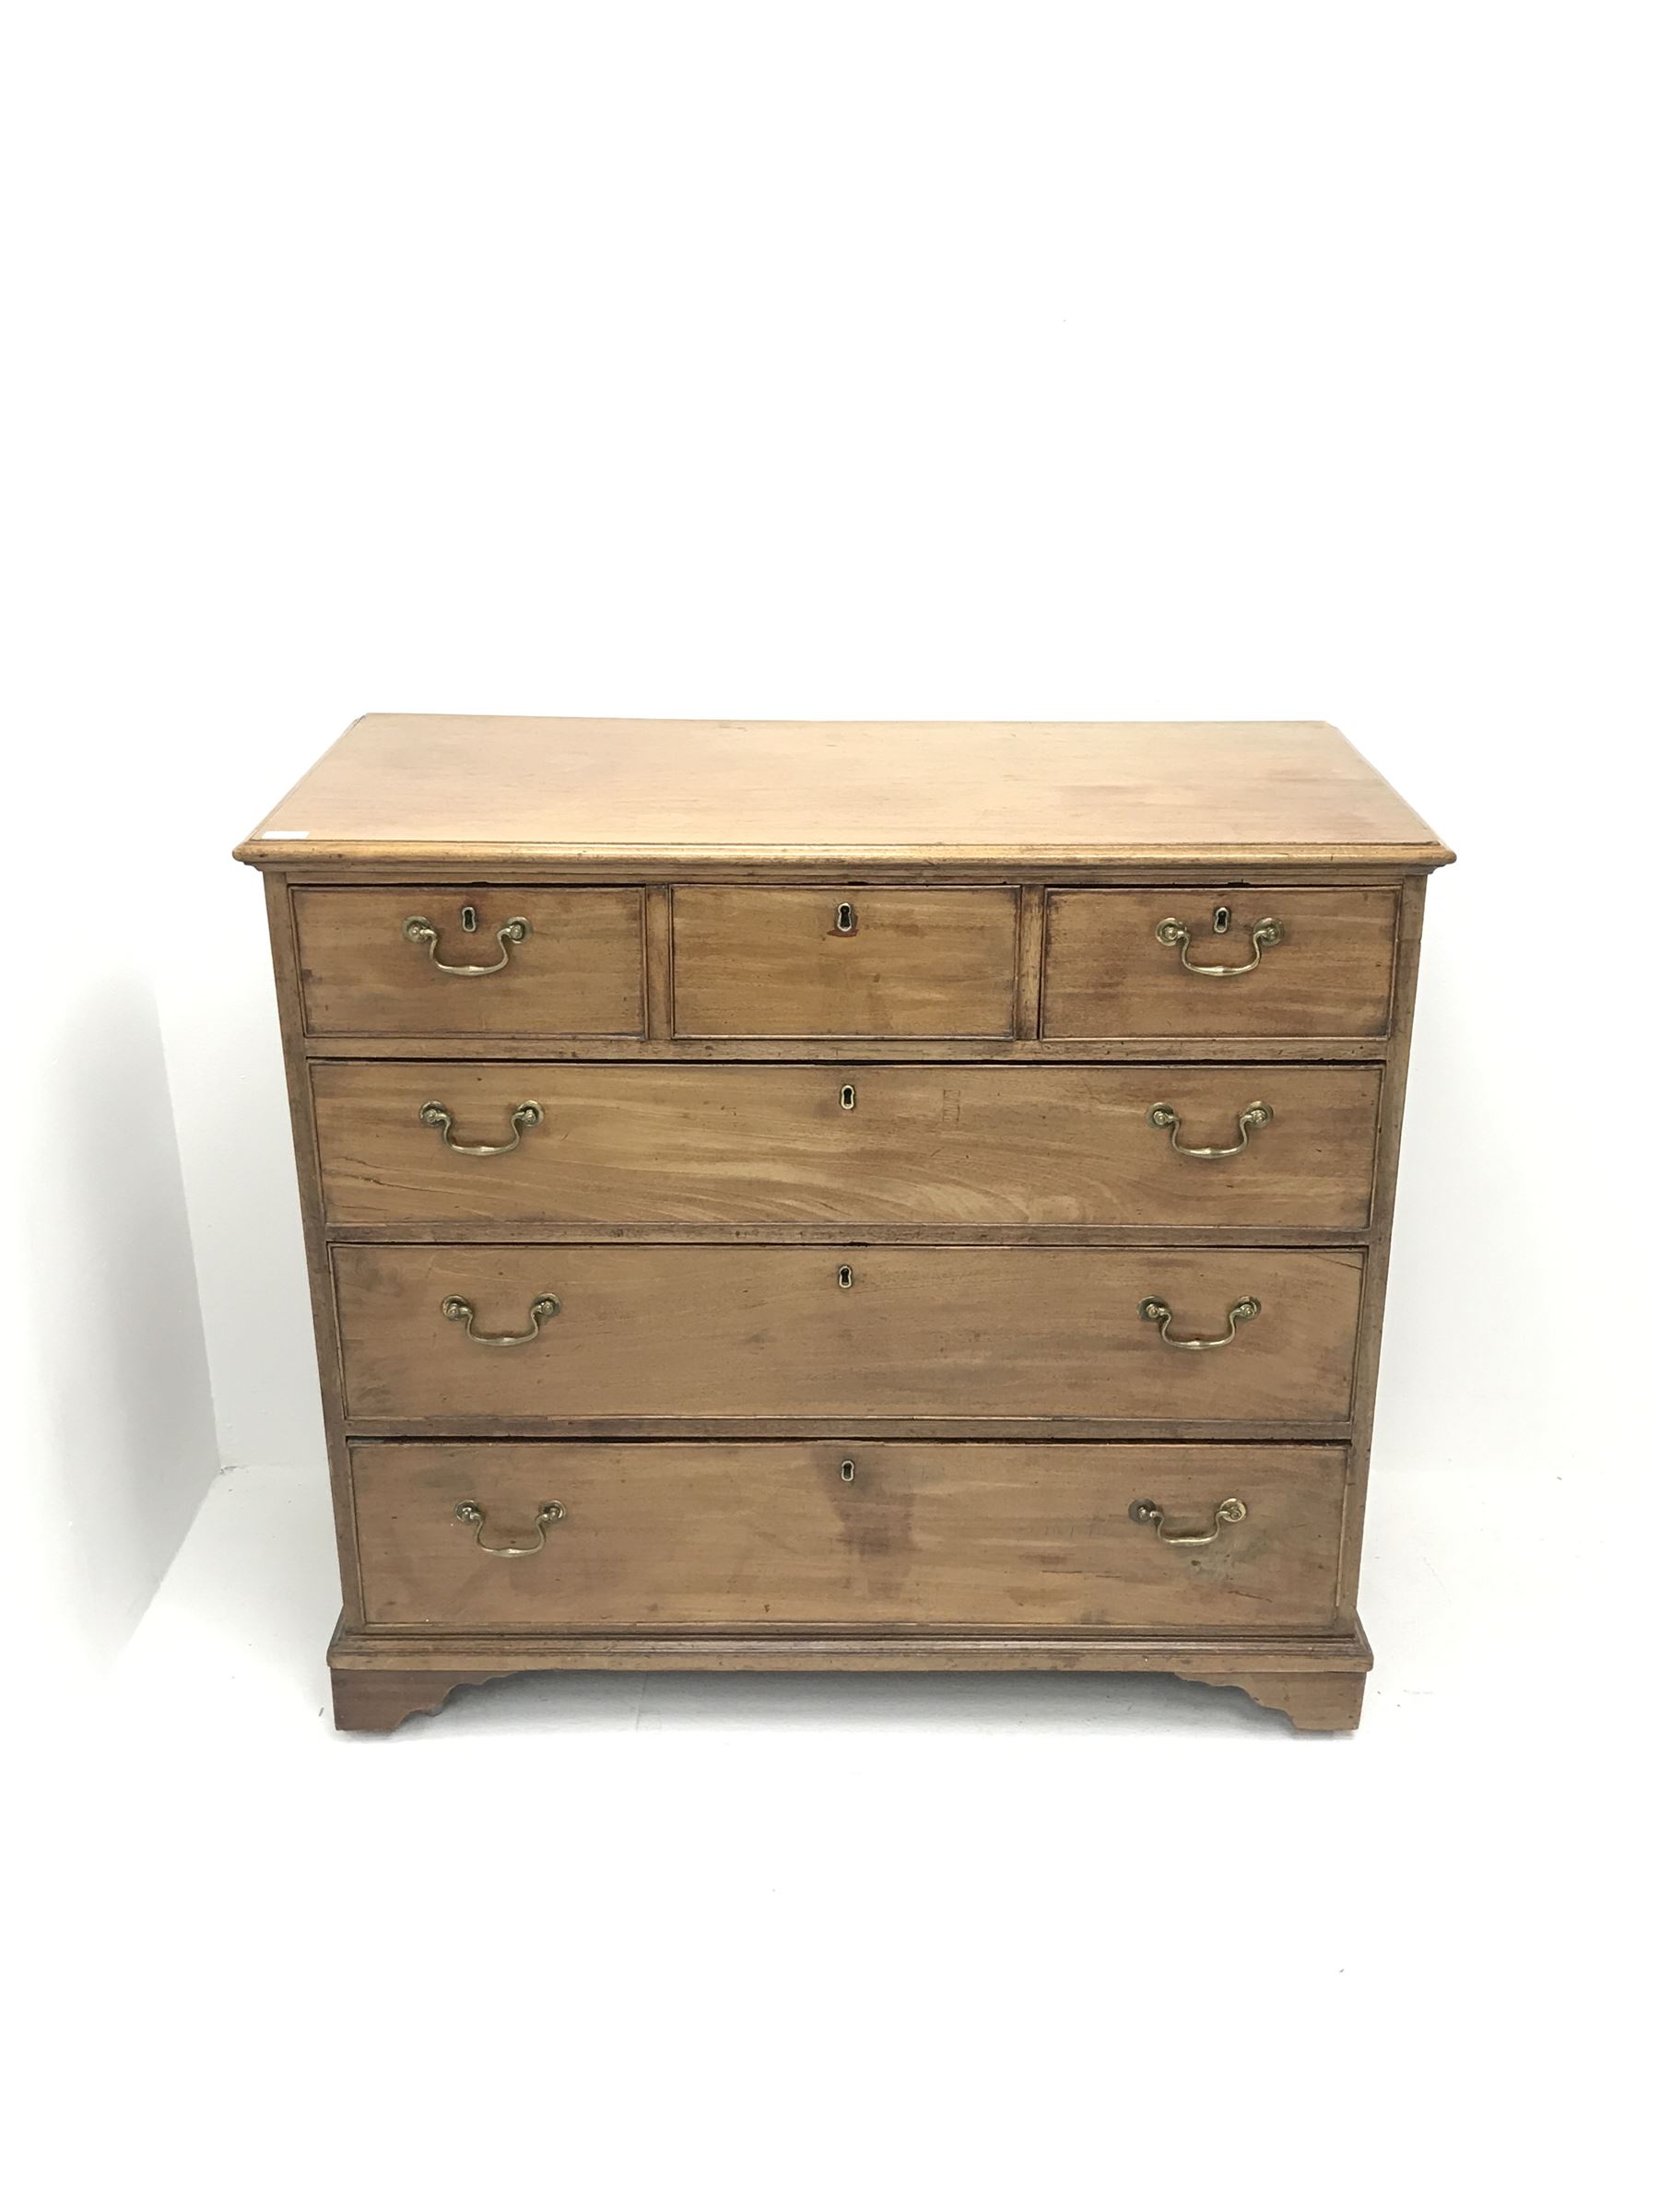 Georgian mahogany chest - Image 2 of 5